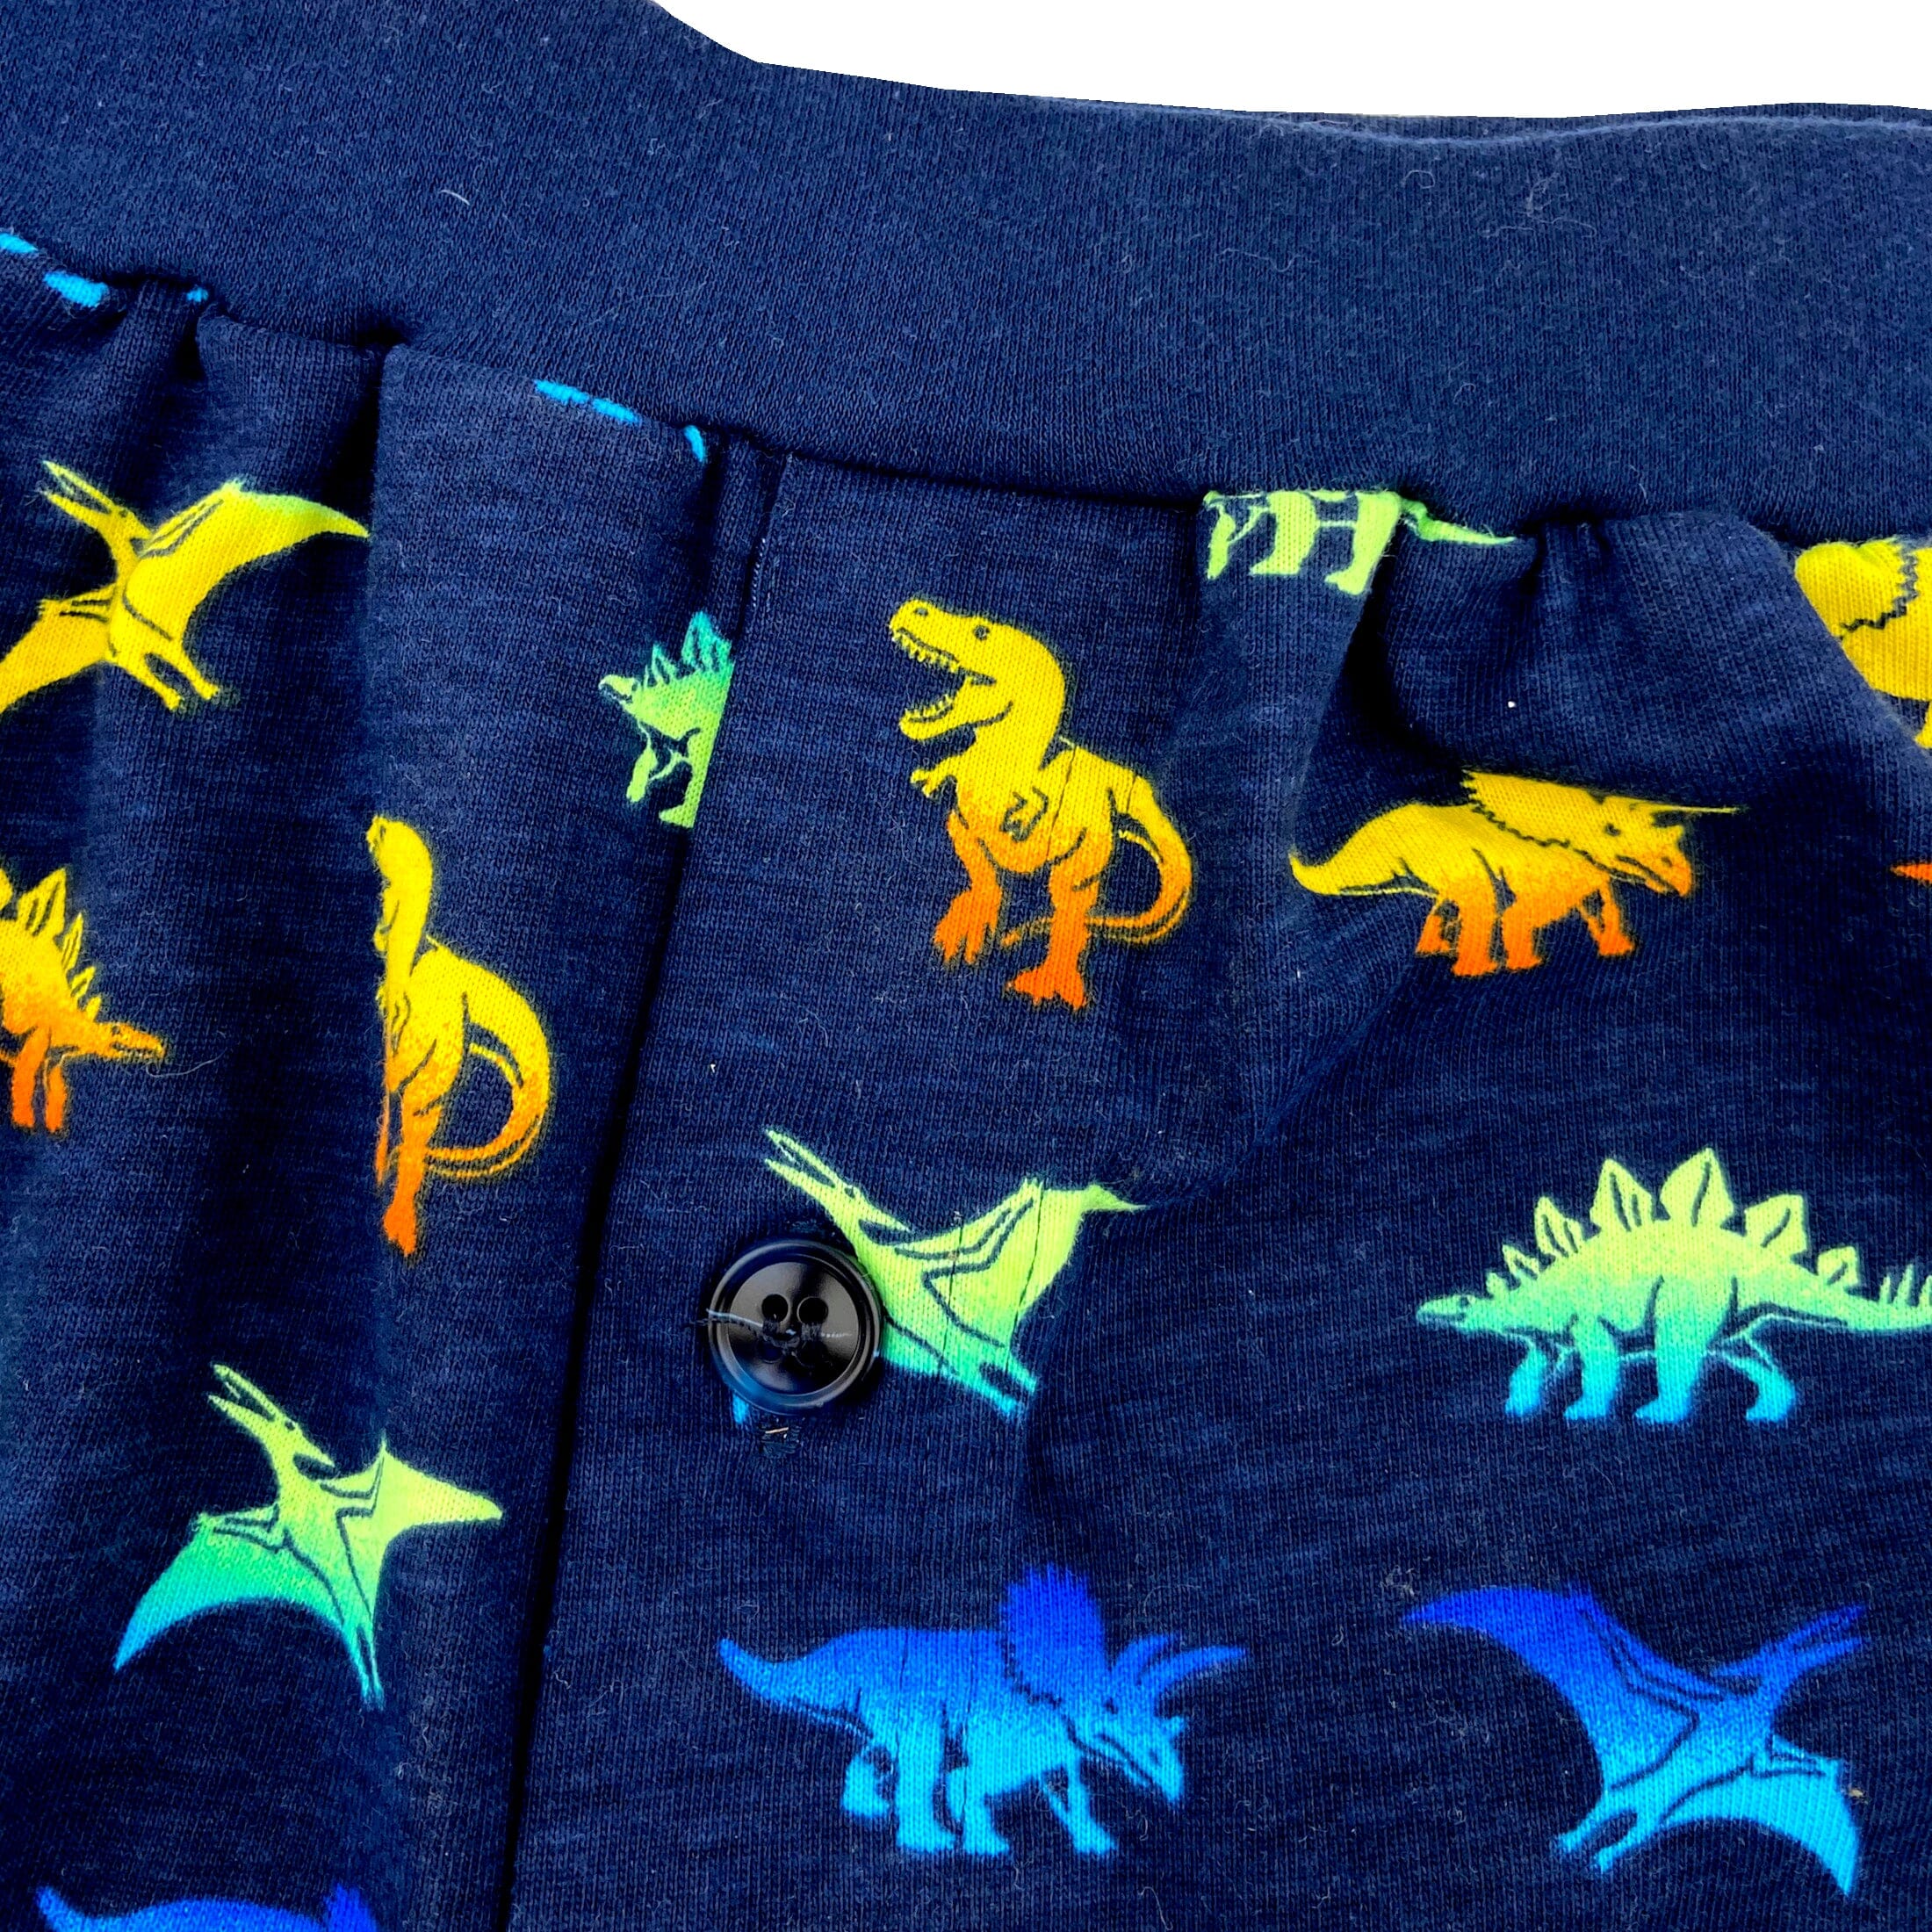 Men's Super Comfy Dinosaur Patterned Cotton Knit Pajama PJ Shorts